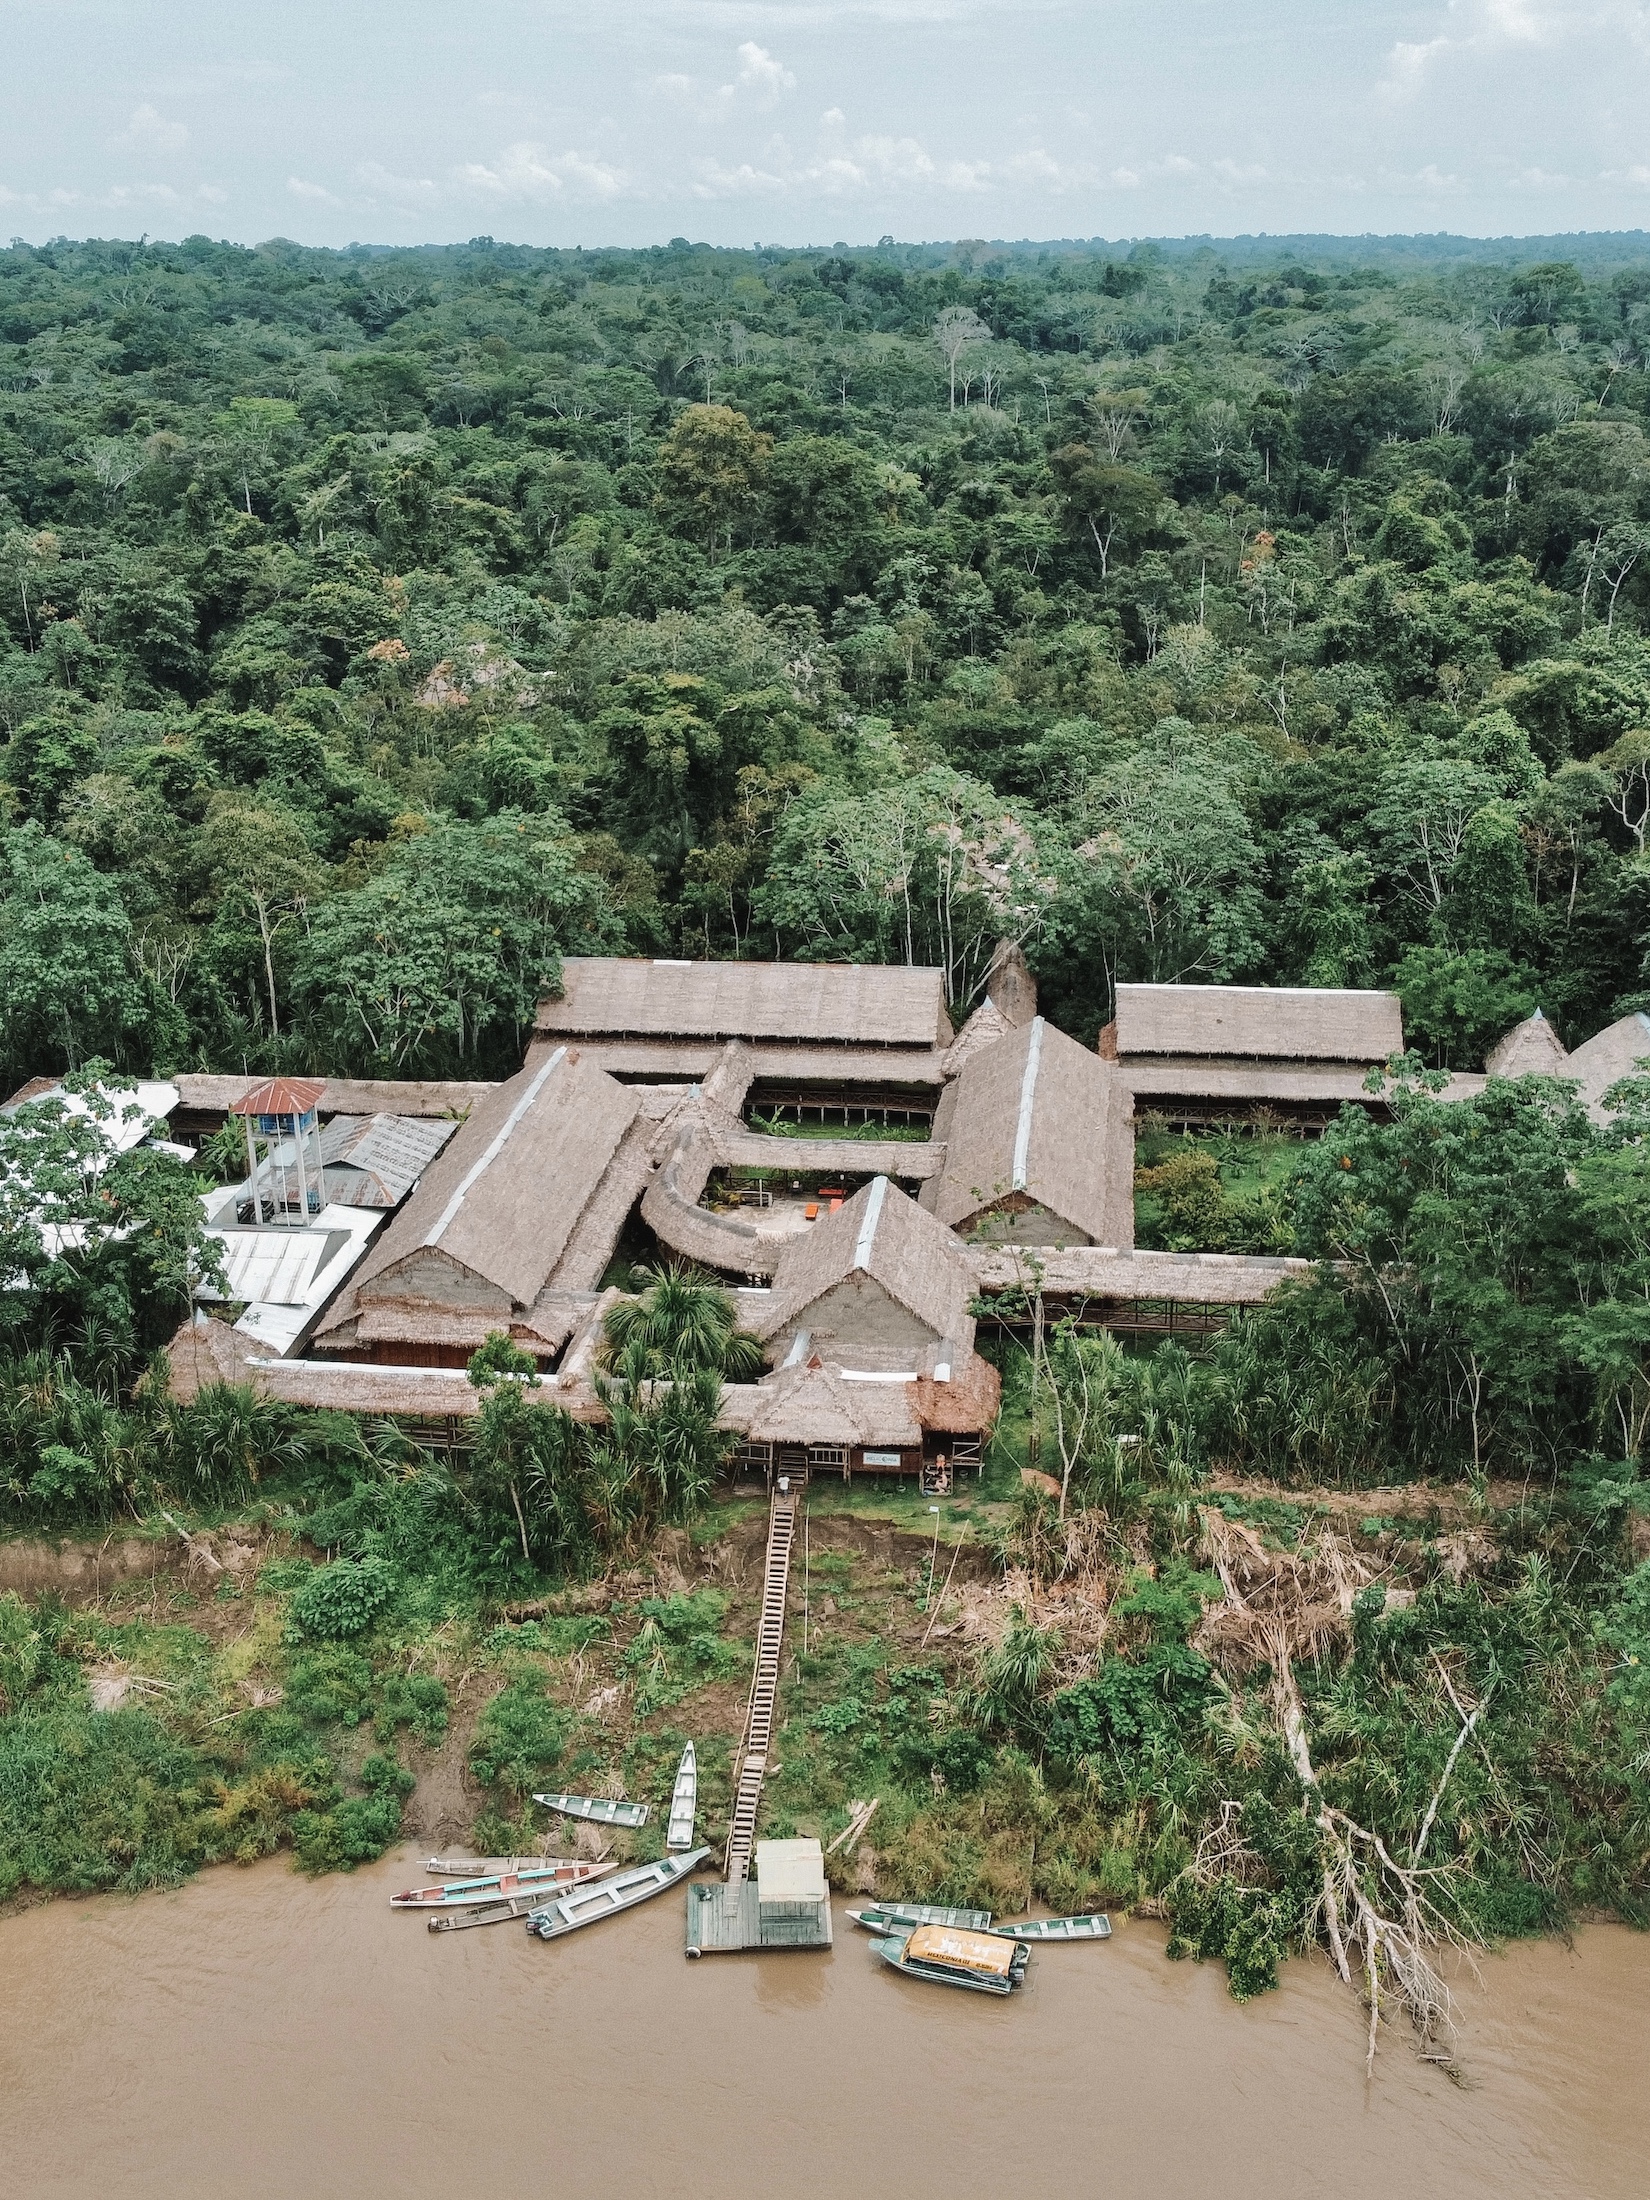 Best ayahuasca retreat in Peru - Blue Morpho at Heliconia Lodge, Amazon River, Peru